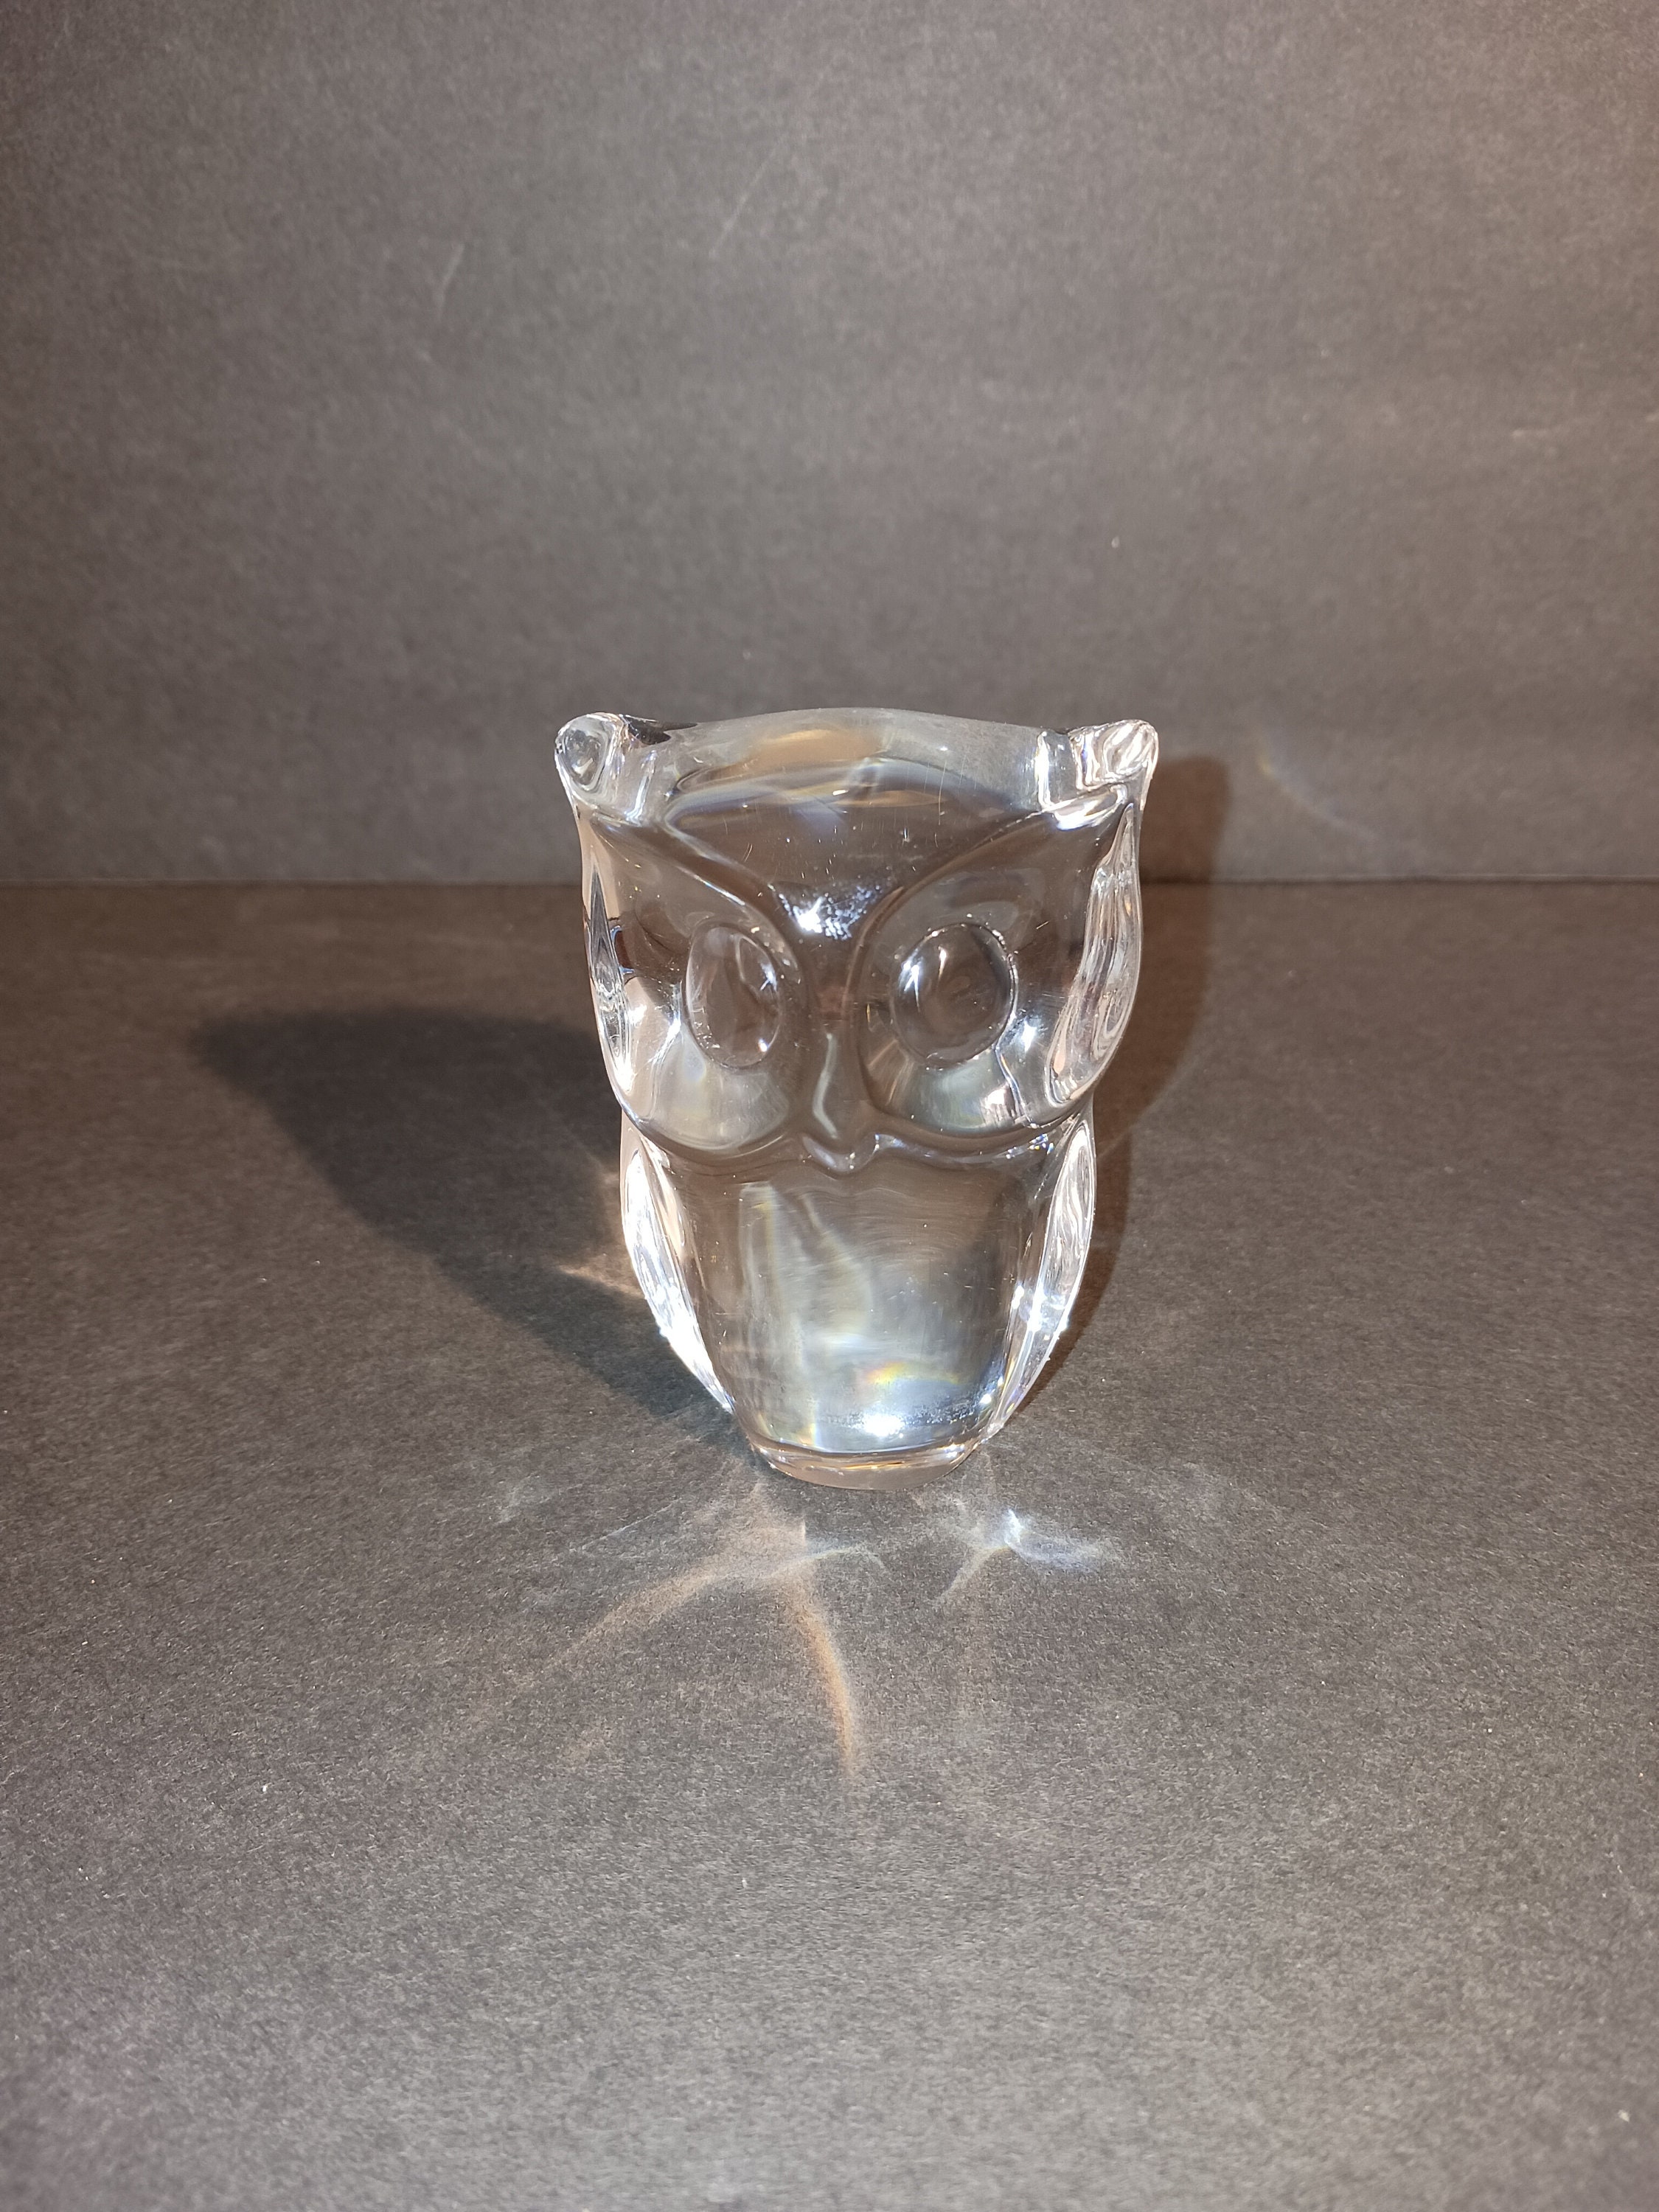 4pc Glencairn Drinkware Glasses with Pitcher Set - Stolzle Lausitz